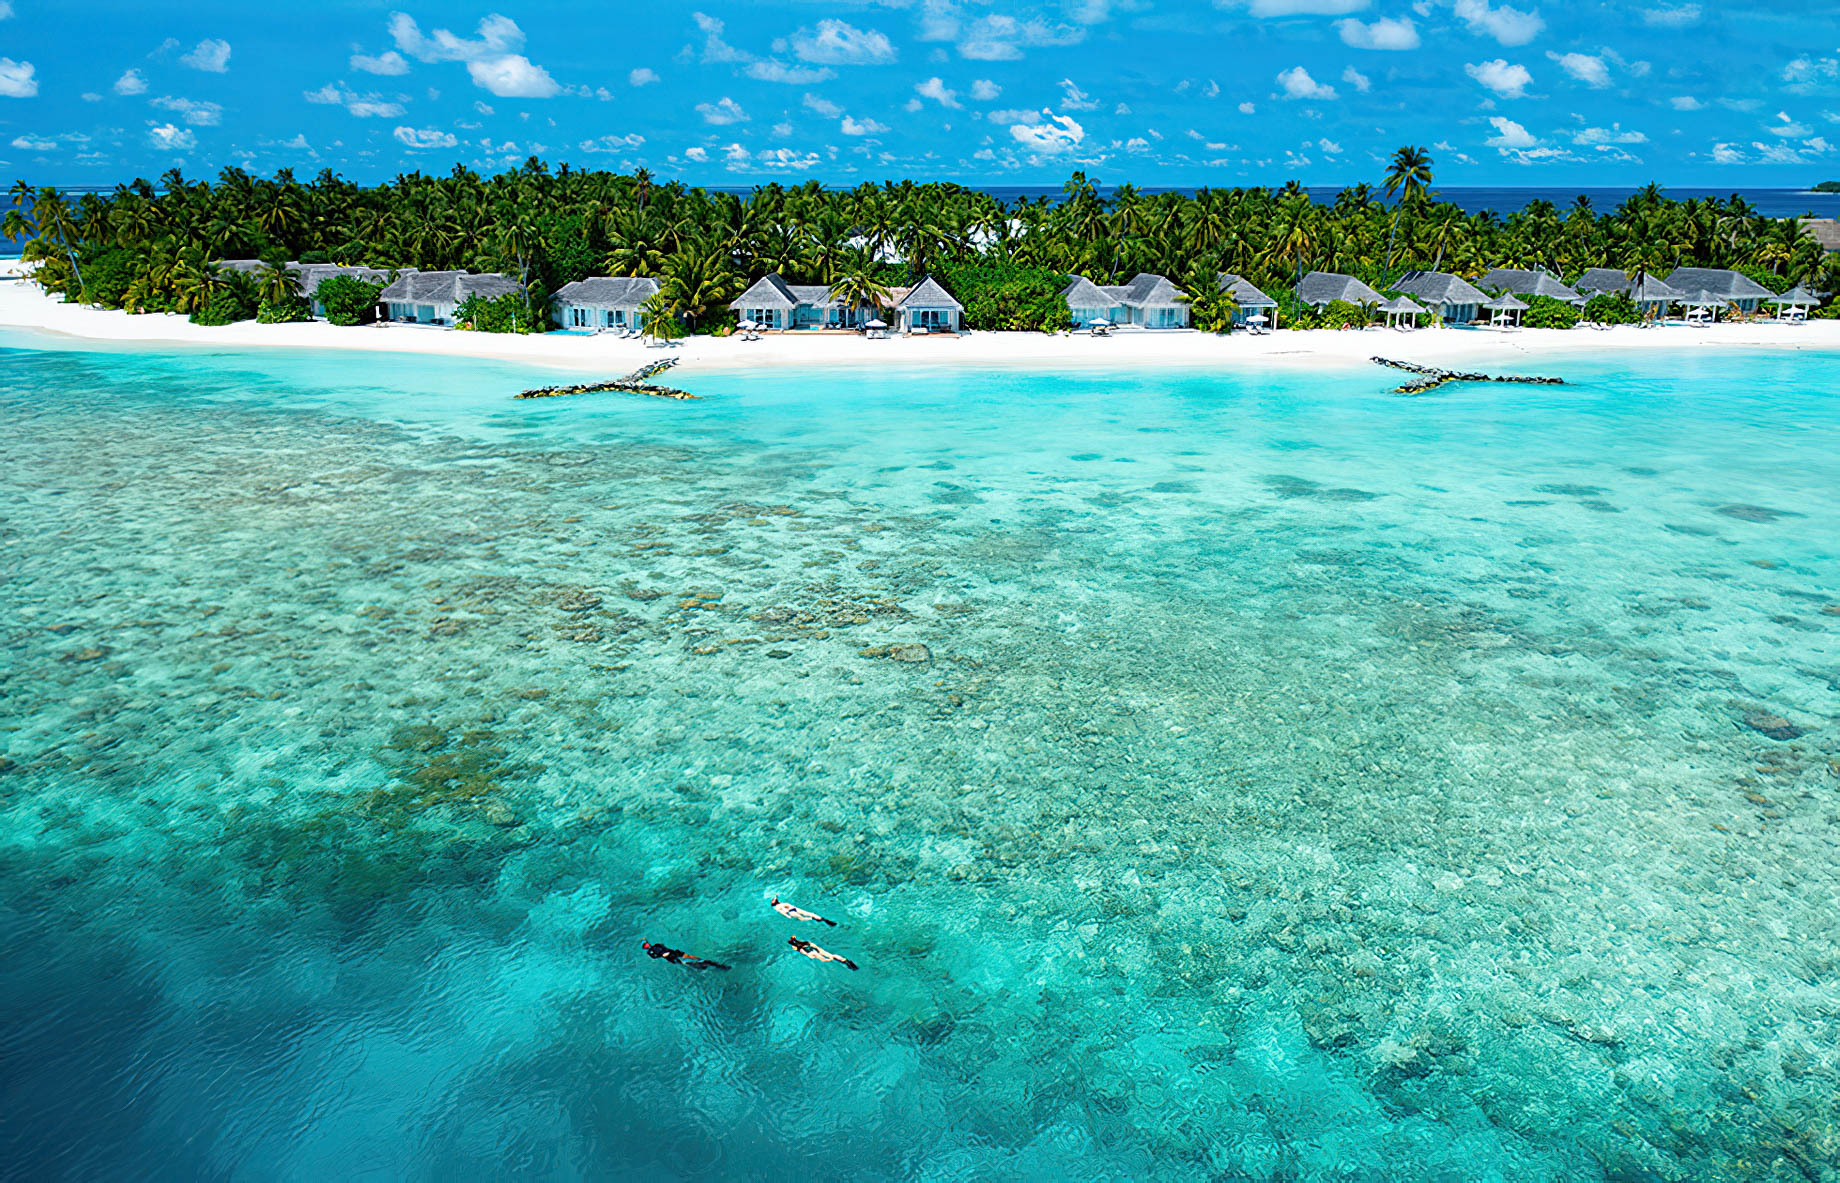 Baglioni Resort Maldives - Maagau Island, Rinbudhoo, Maldives - Snorkeling